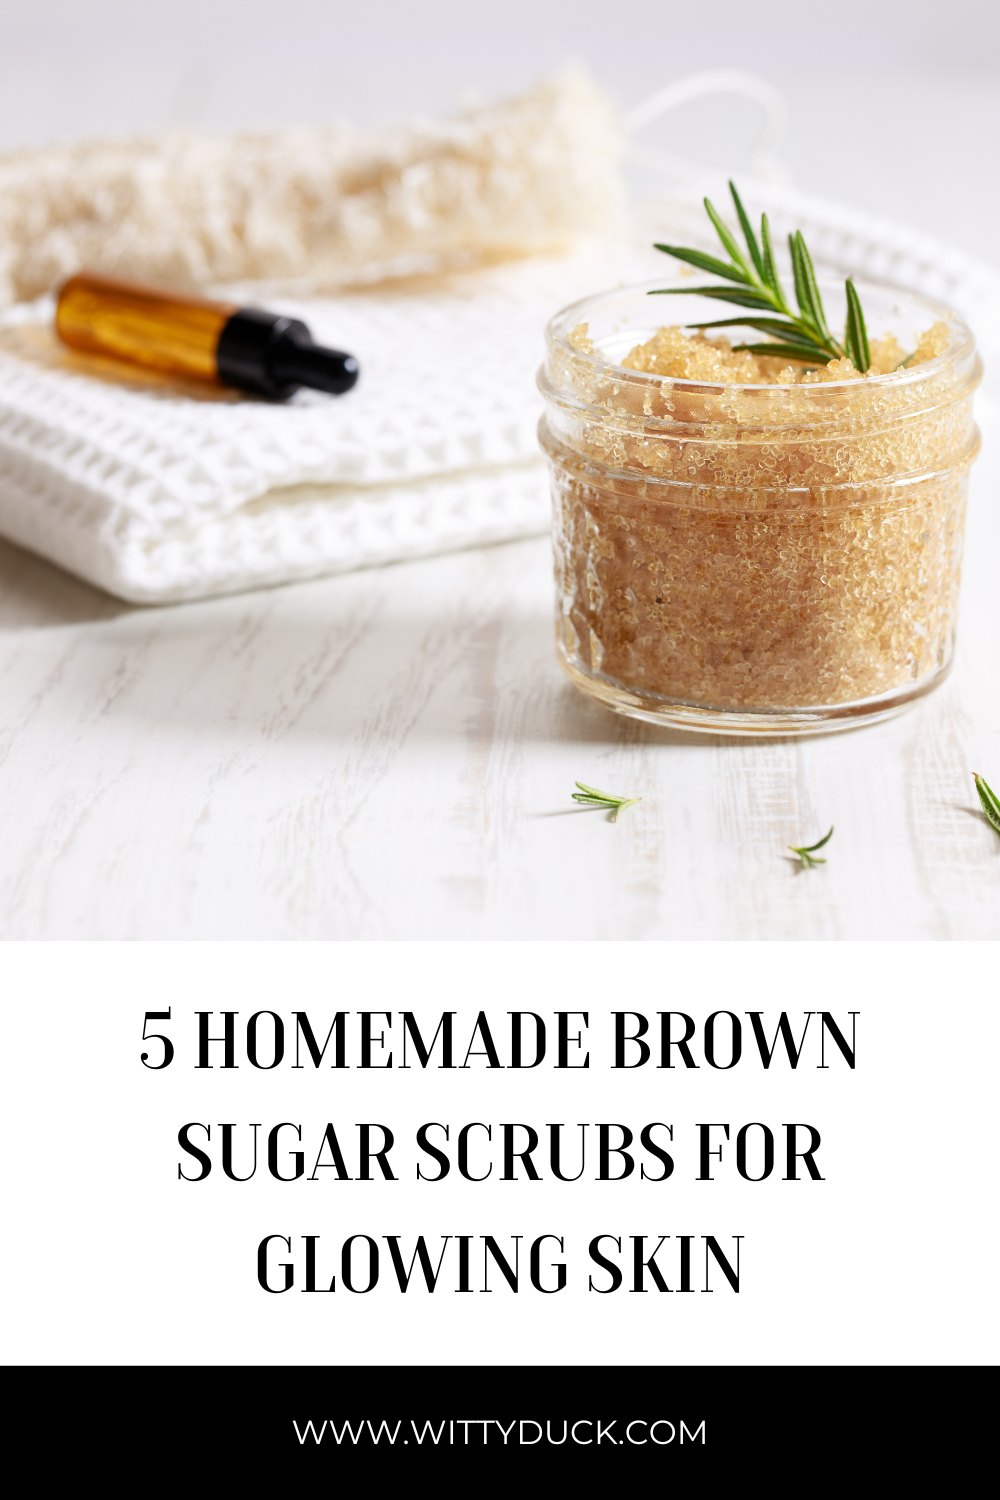 5 Homemade Brown Sugar Scrubs for Glowing Skin